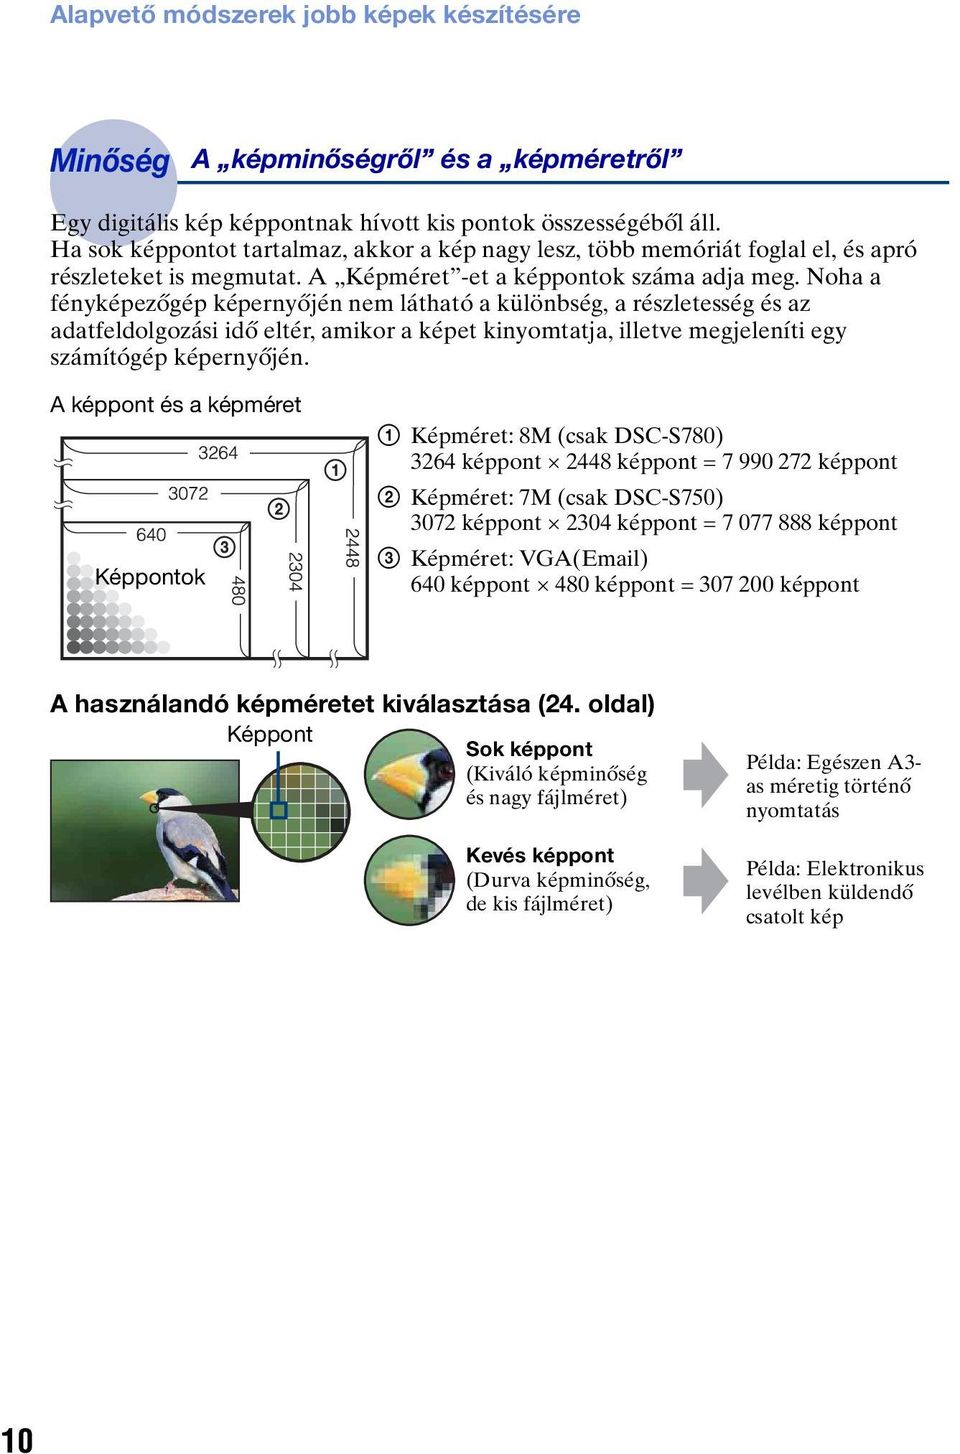 A Cyber-shot kézikönyve - PDF Free Download